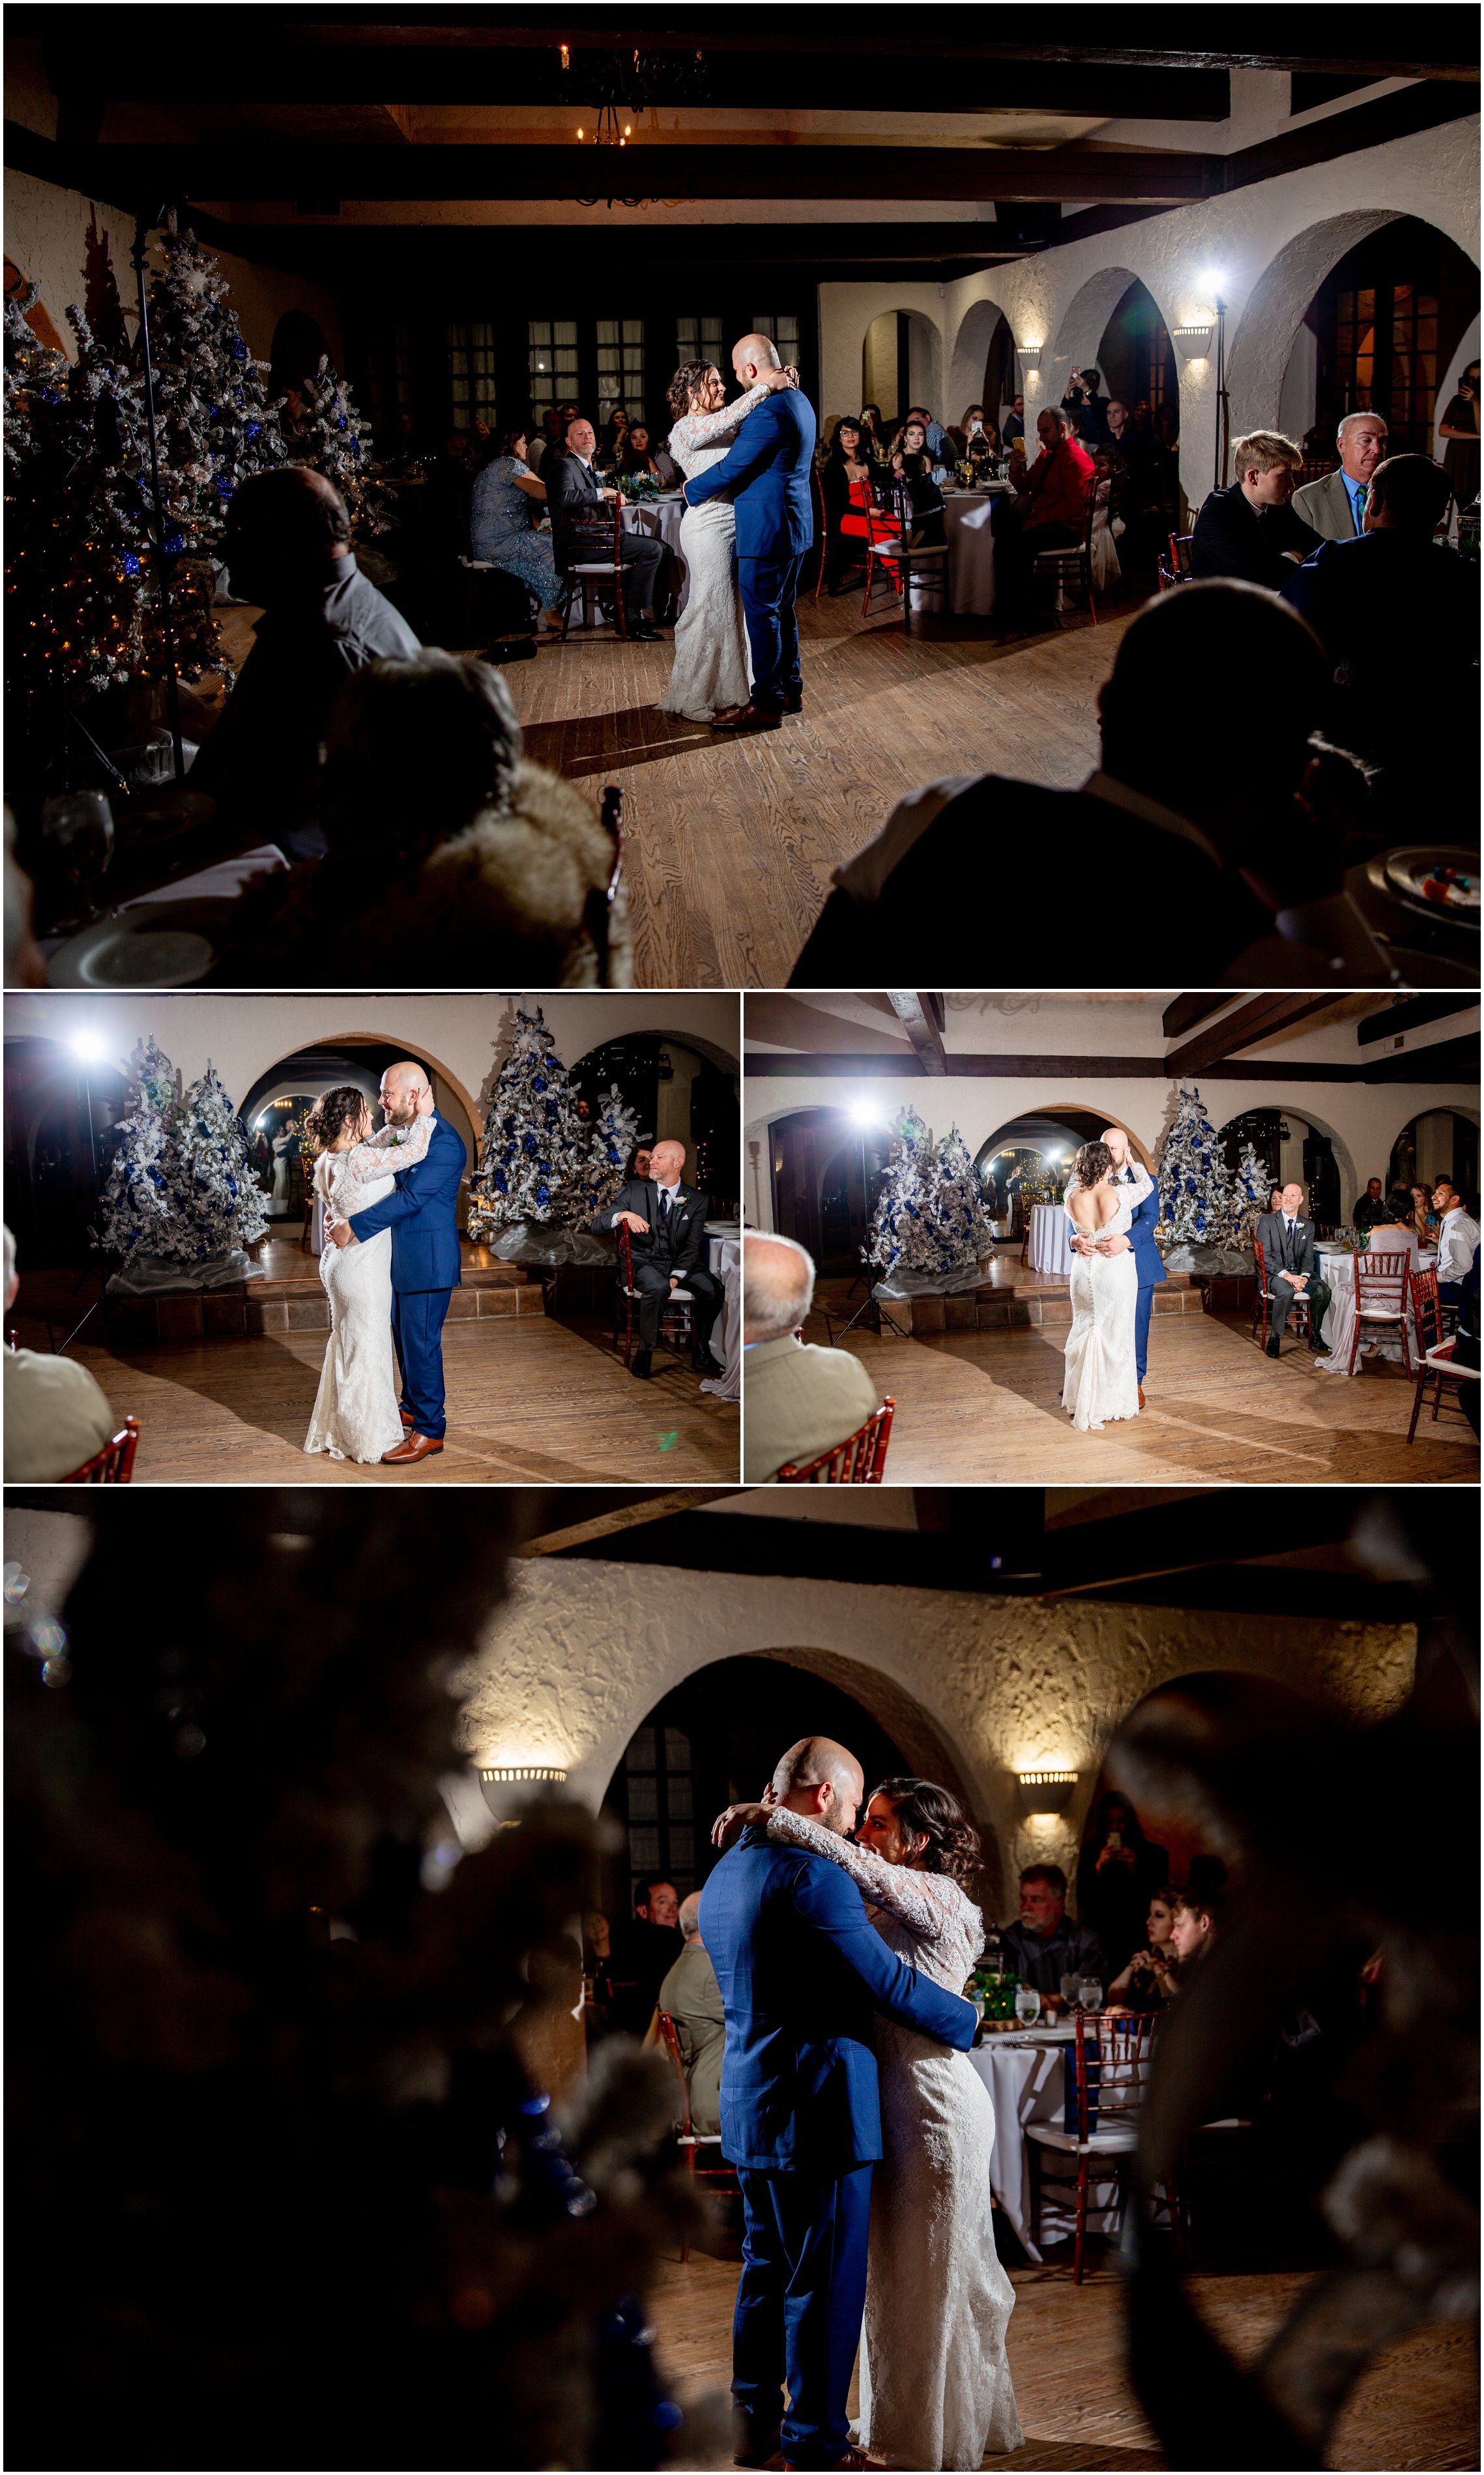 Sioux Falls Bride,Sioux Falls Photographers,Sioux Falls Wedding,Sioux Falls Wedding PHotographers,Sioux Falls Wedding Photographer,